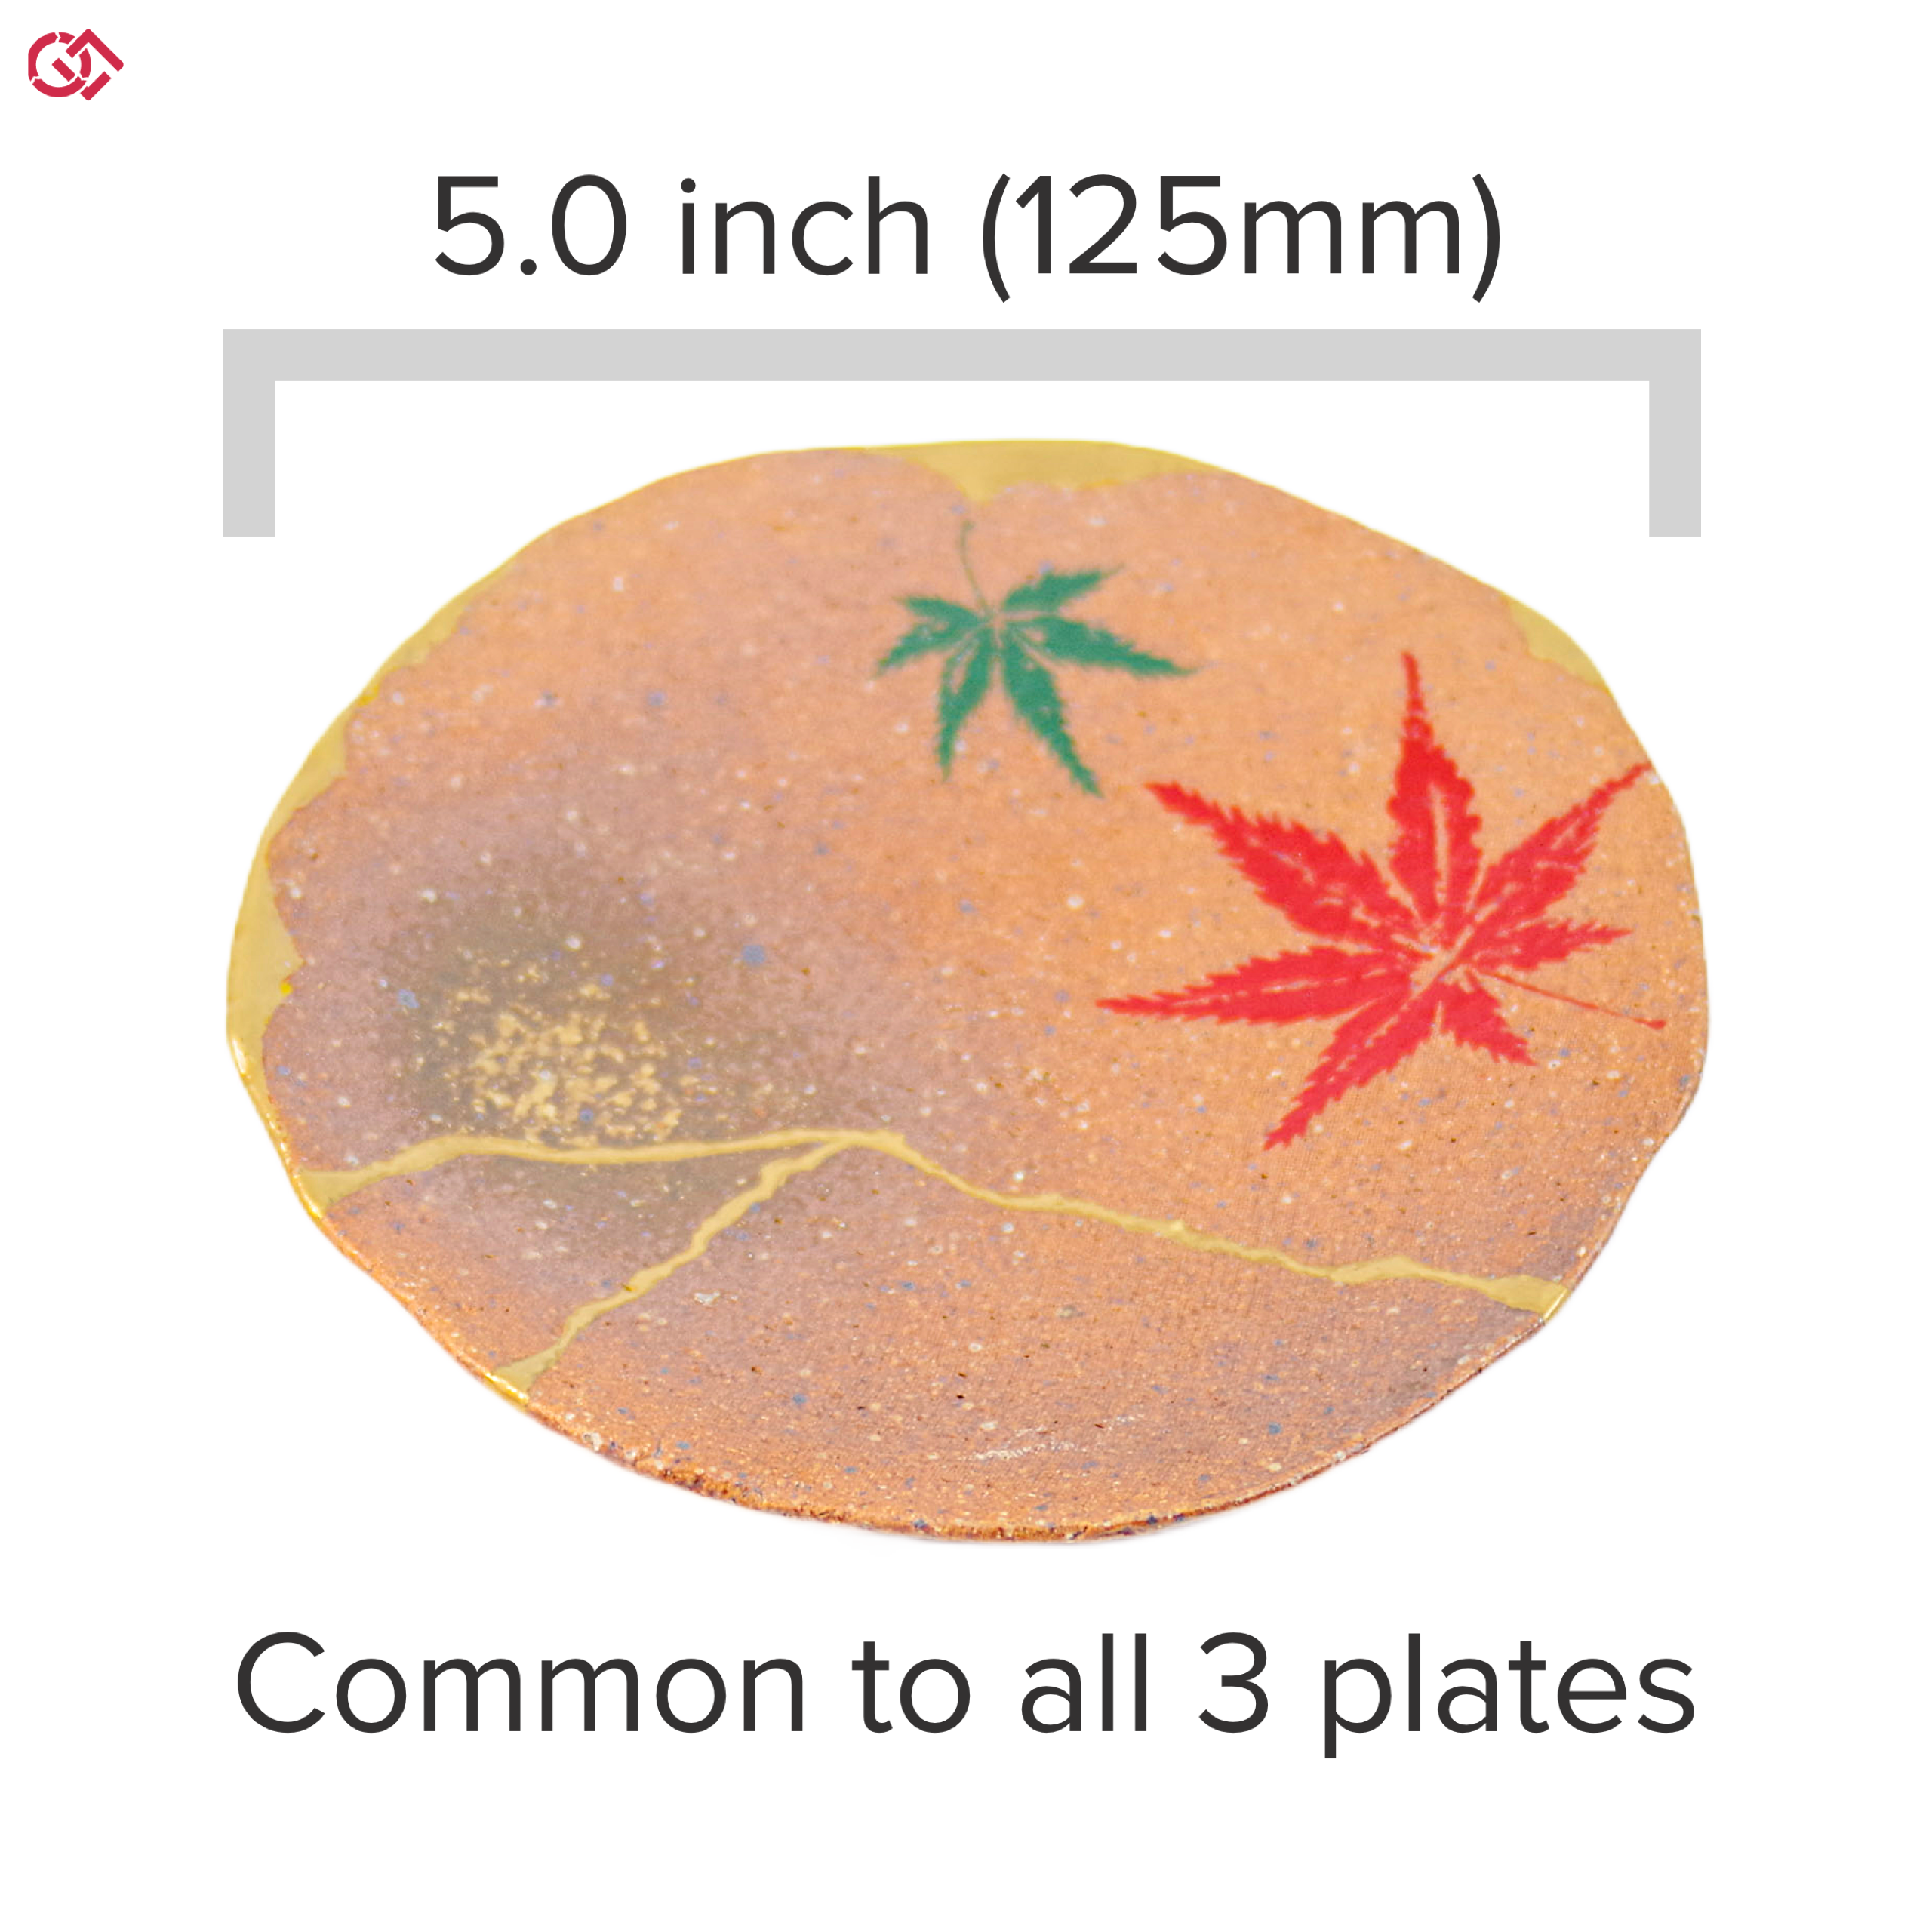 Small Kintsugi plate with description of a diameter